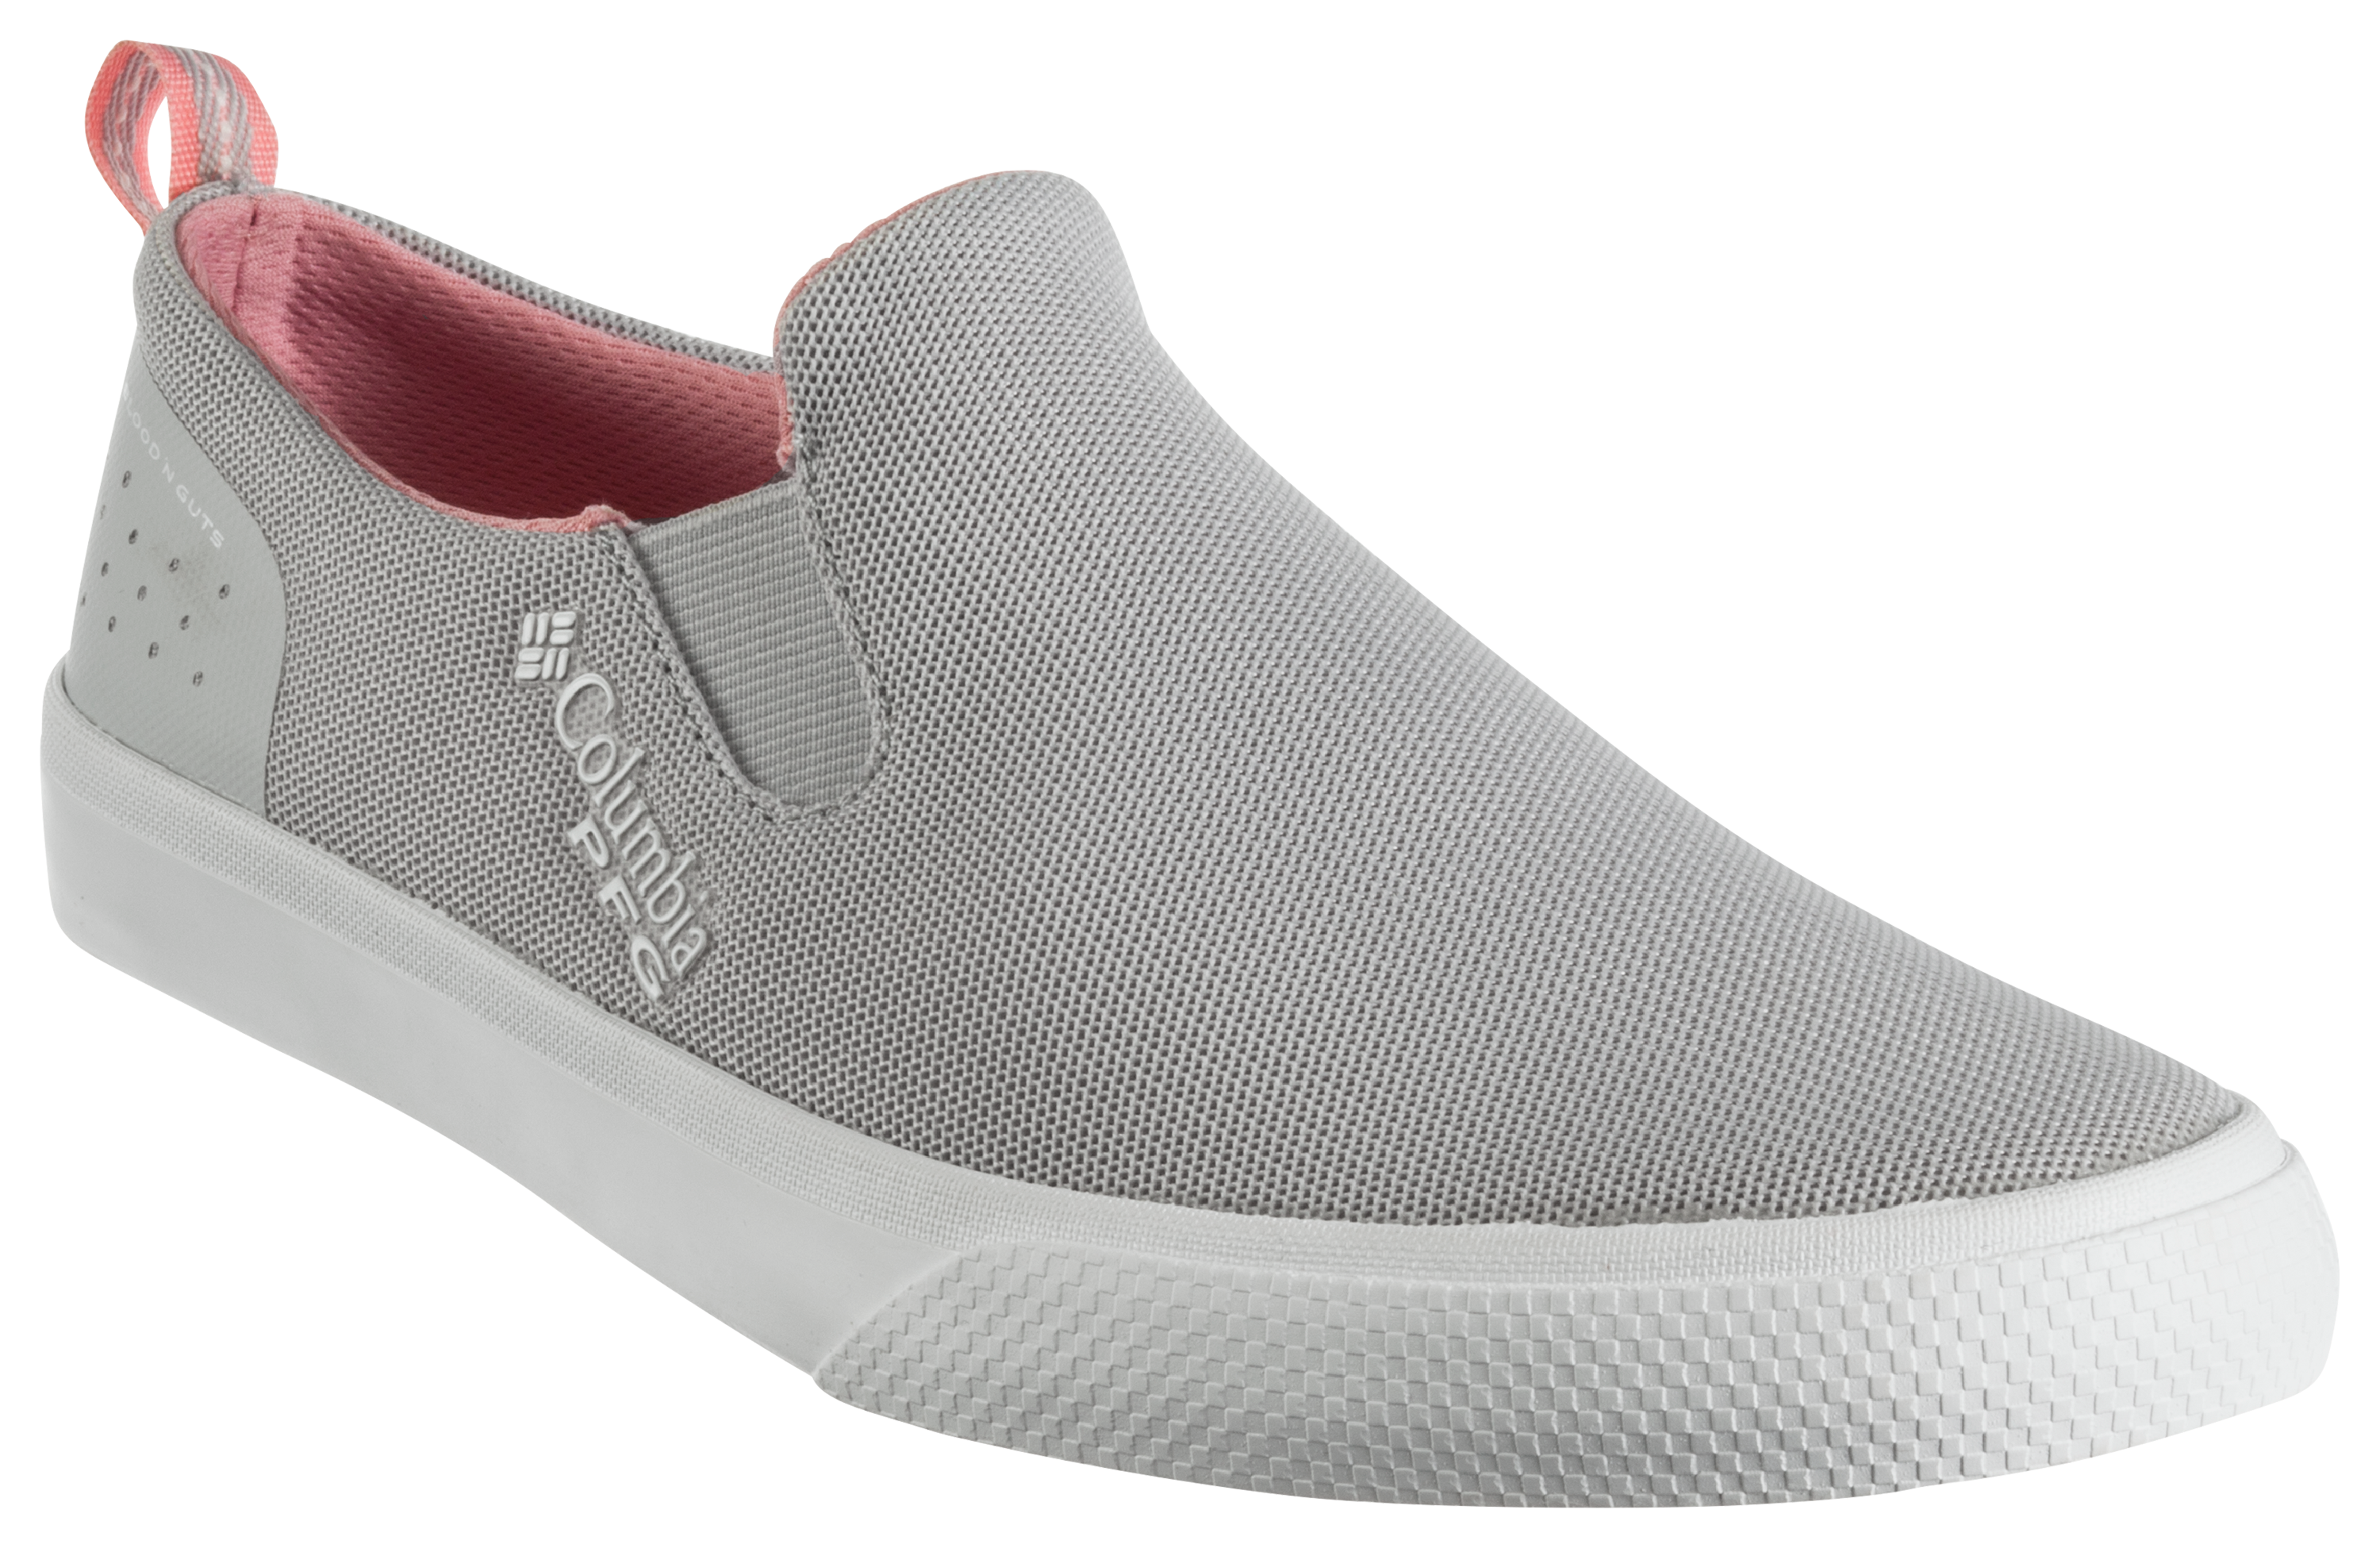 Columbia Dorado Slip PFG Slip-On Fishing Shoes for Ladies